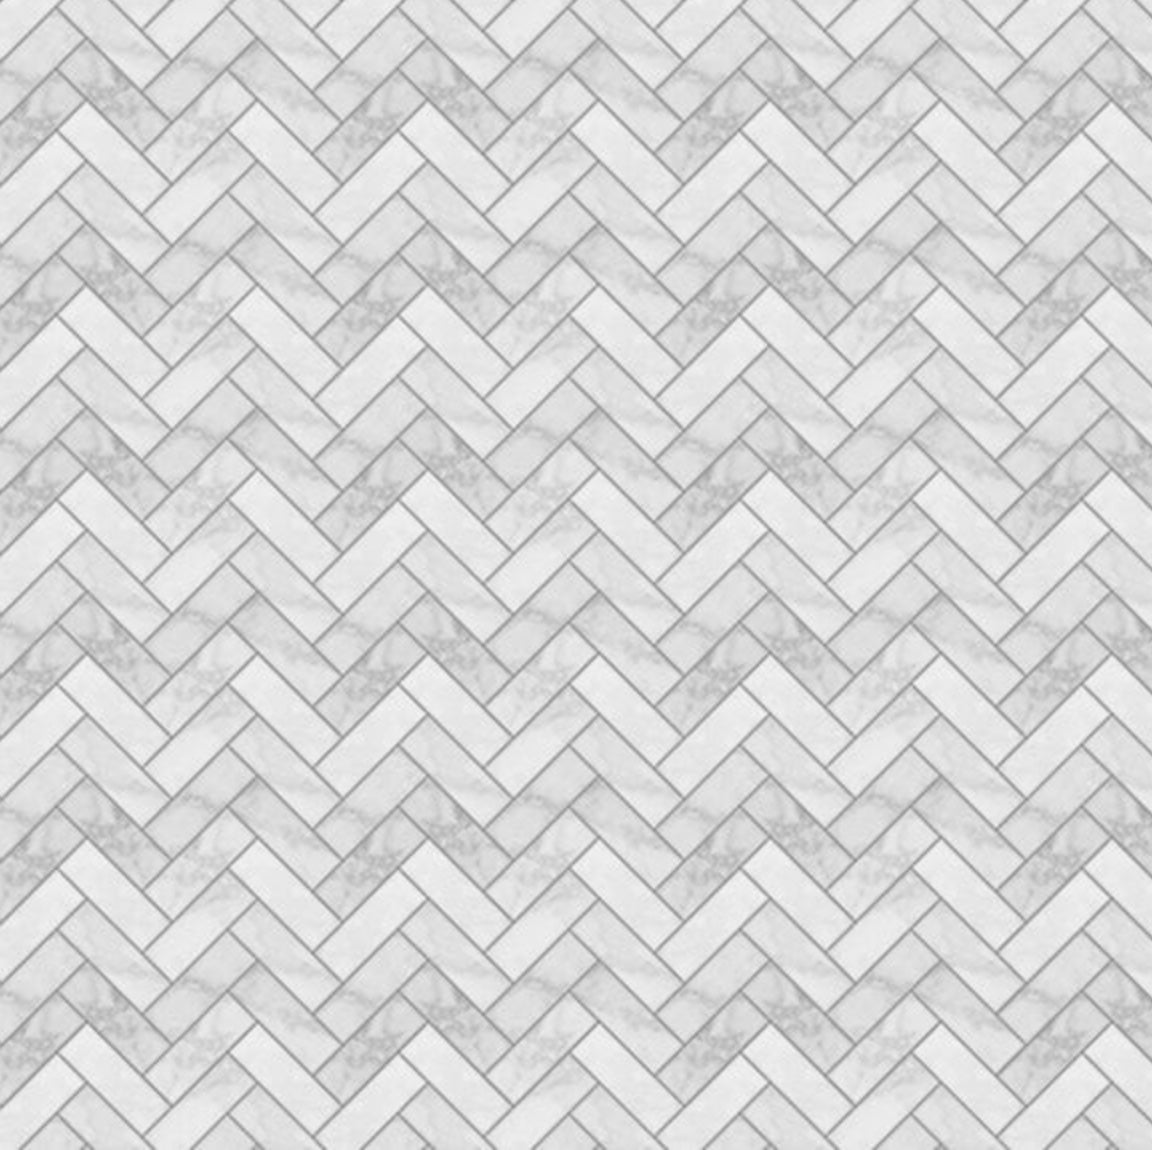 Showerwall Acrylic Patterns & Tiles Collection- Herringbone